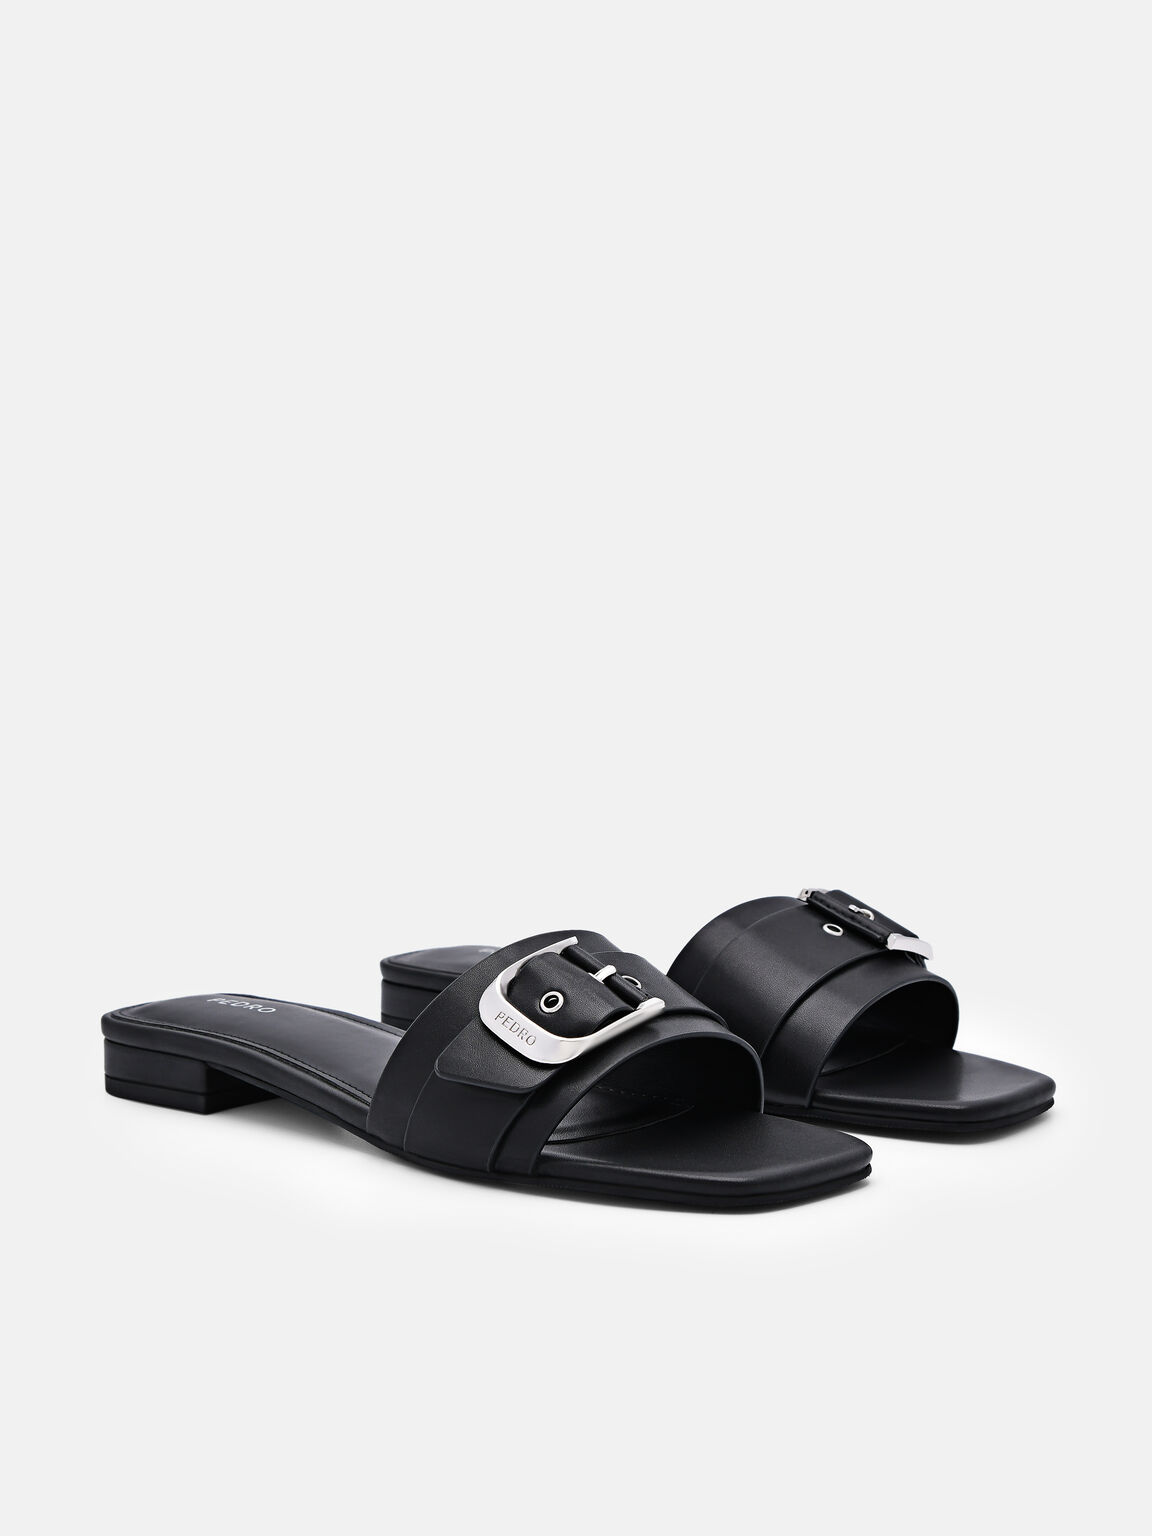 Helix Buckle Sandals, Black, hi-res